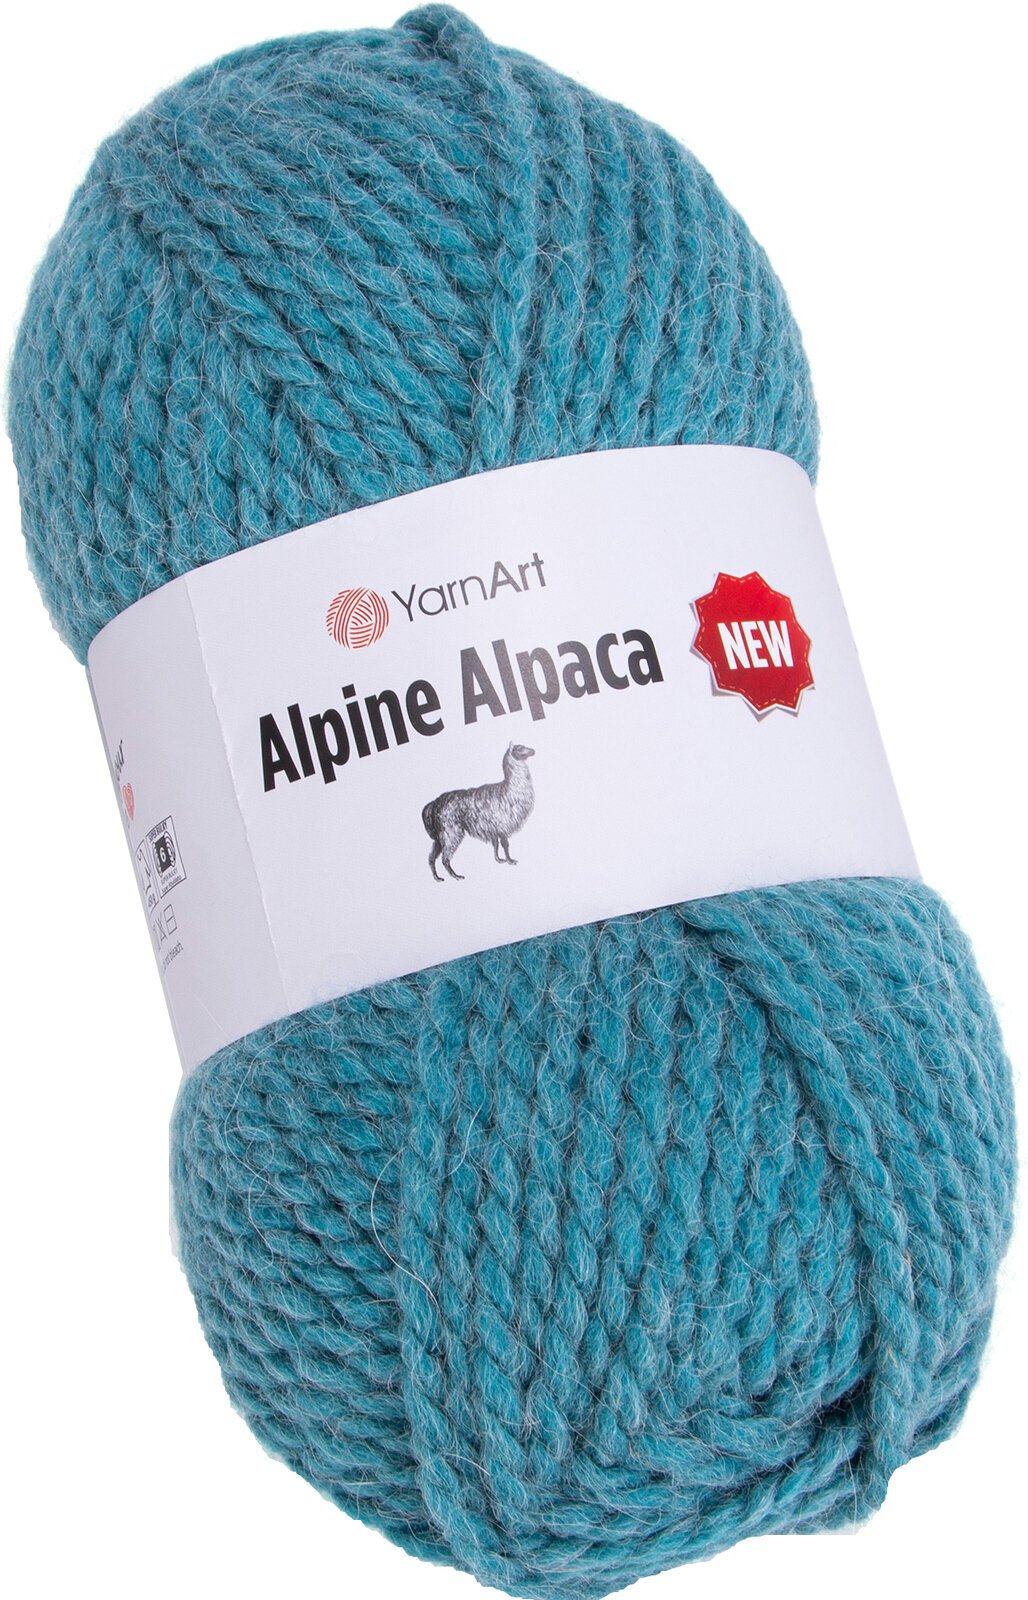 Knitting Yarn Yarn Art Alpine Alpaca New 1450 Knitting Yarn